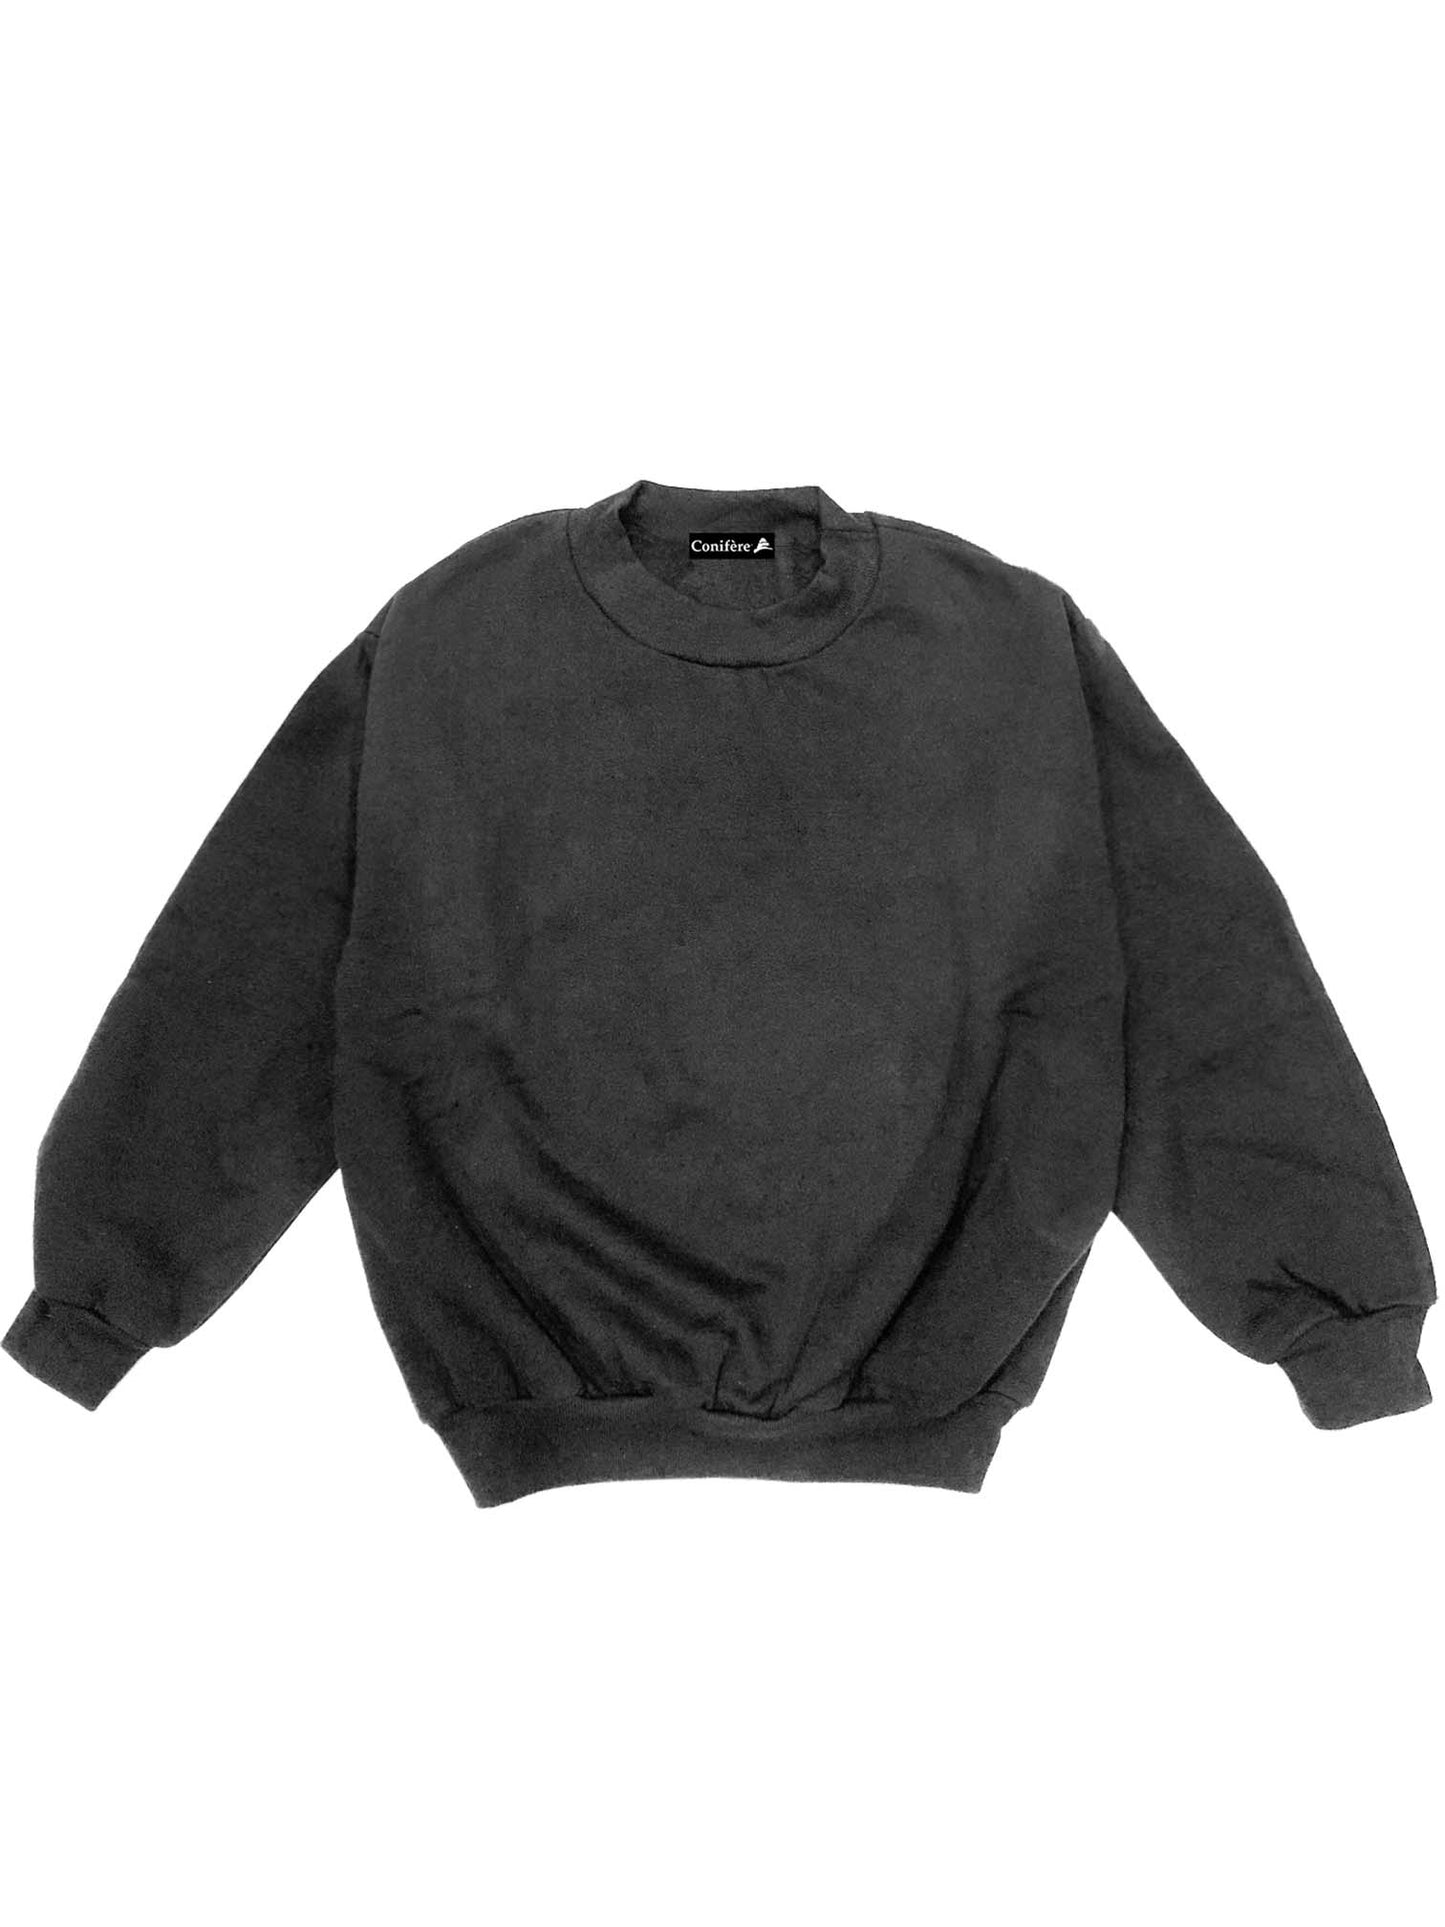 Unisex Kids Black Sweatshirt - S-XL